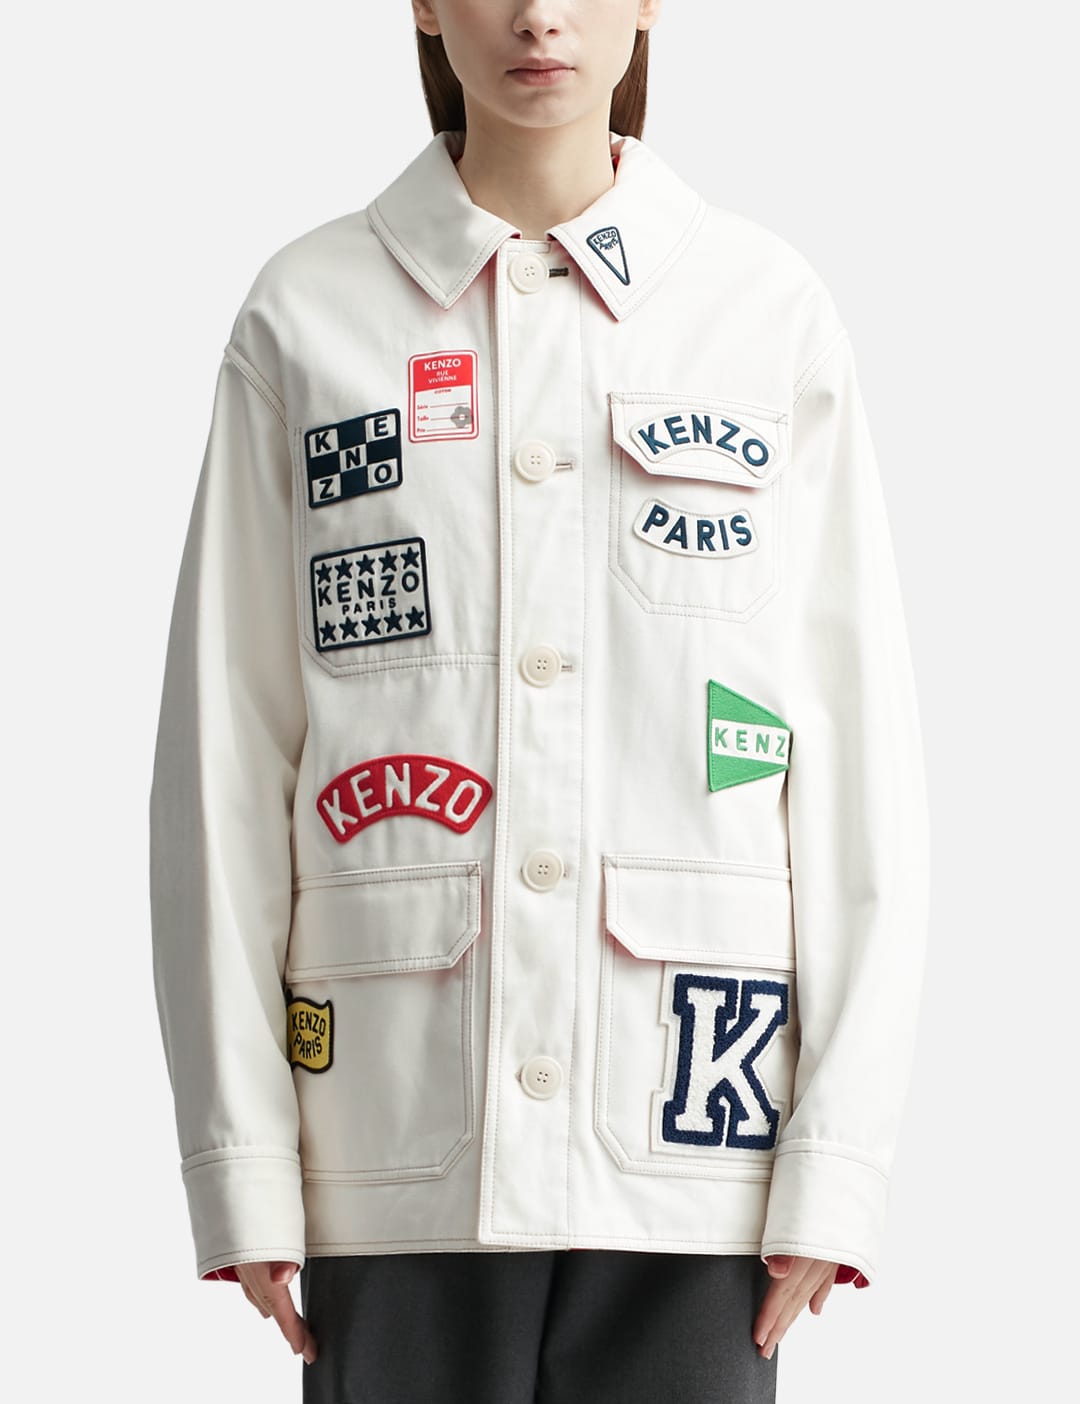 Kenzo - Kenzo Sailor Workwear Jacket | HBX - Globally Curated